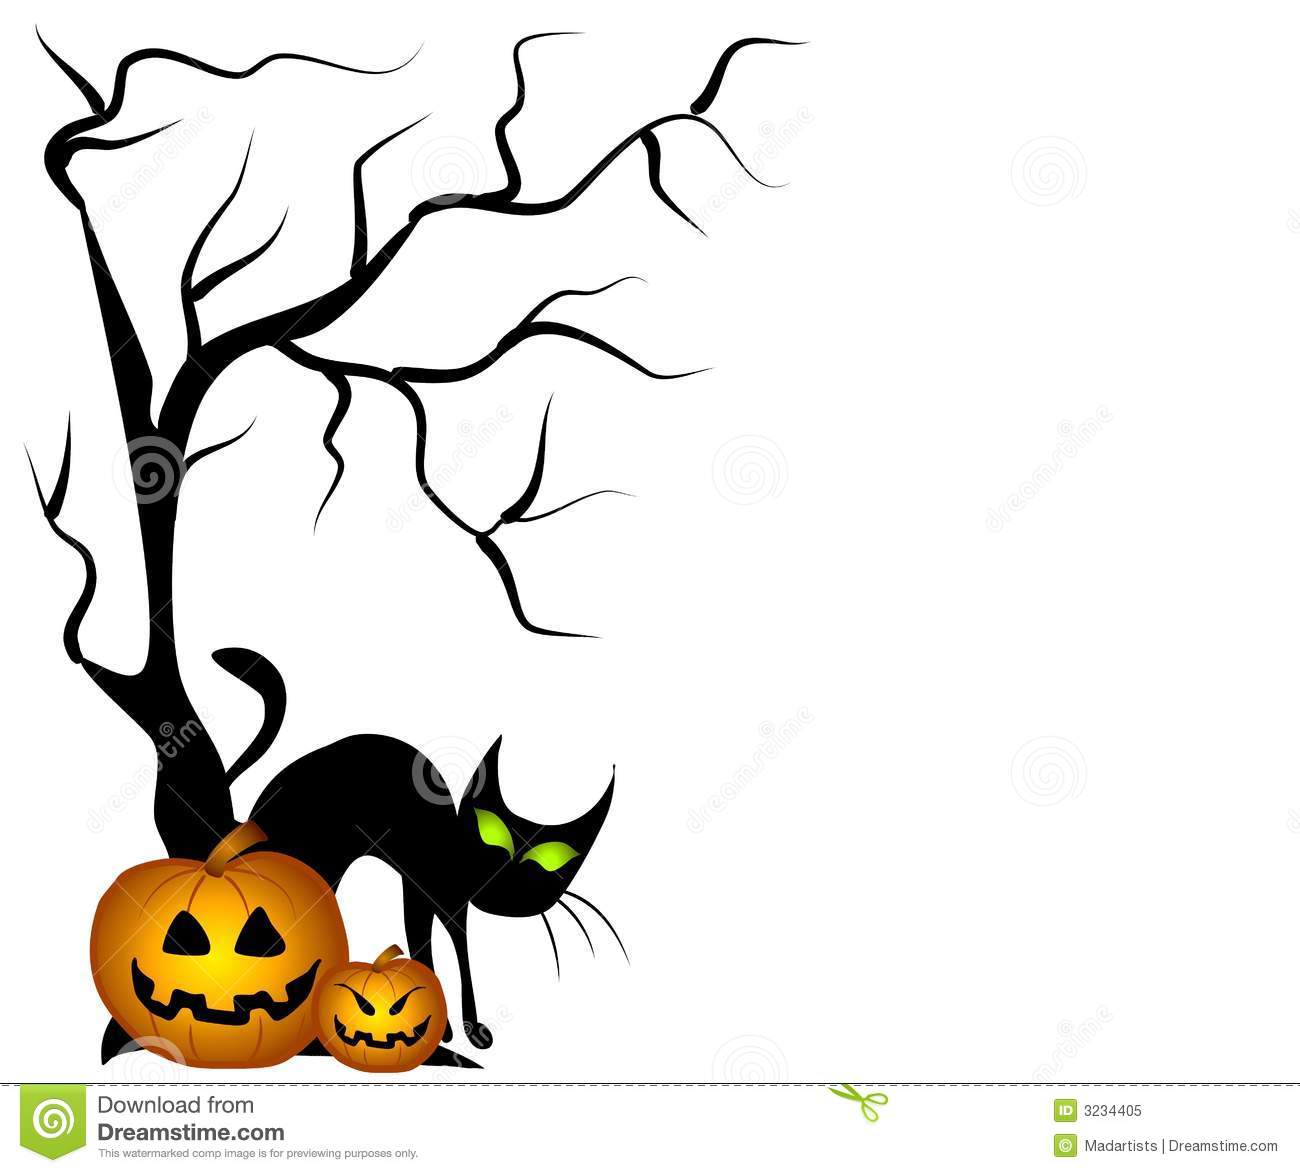 Black Cat Halloween Pumpkins Royalty Free Stock Photo   Image  3234405